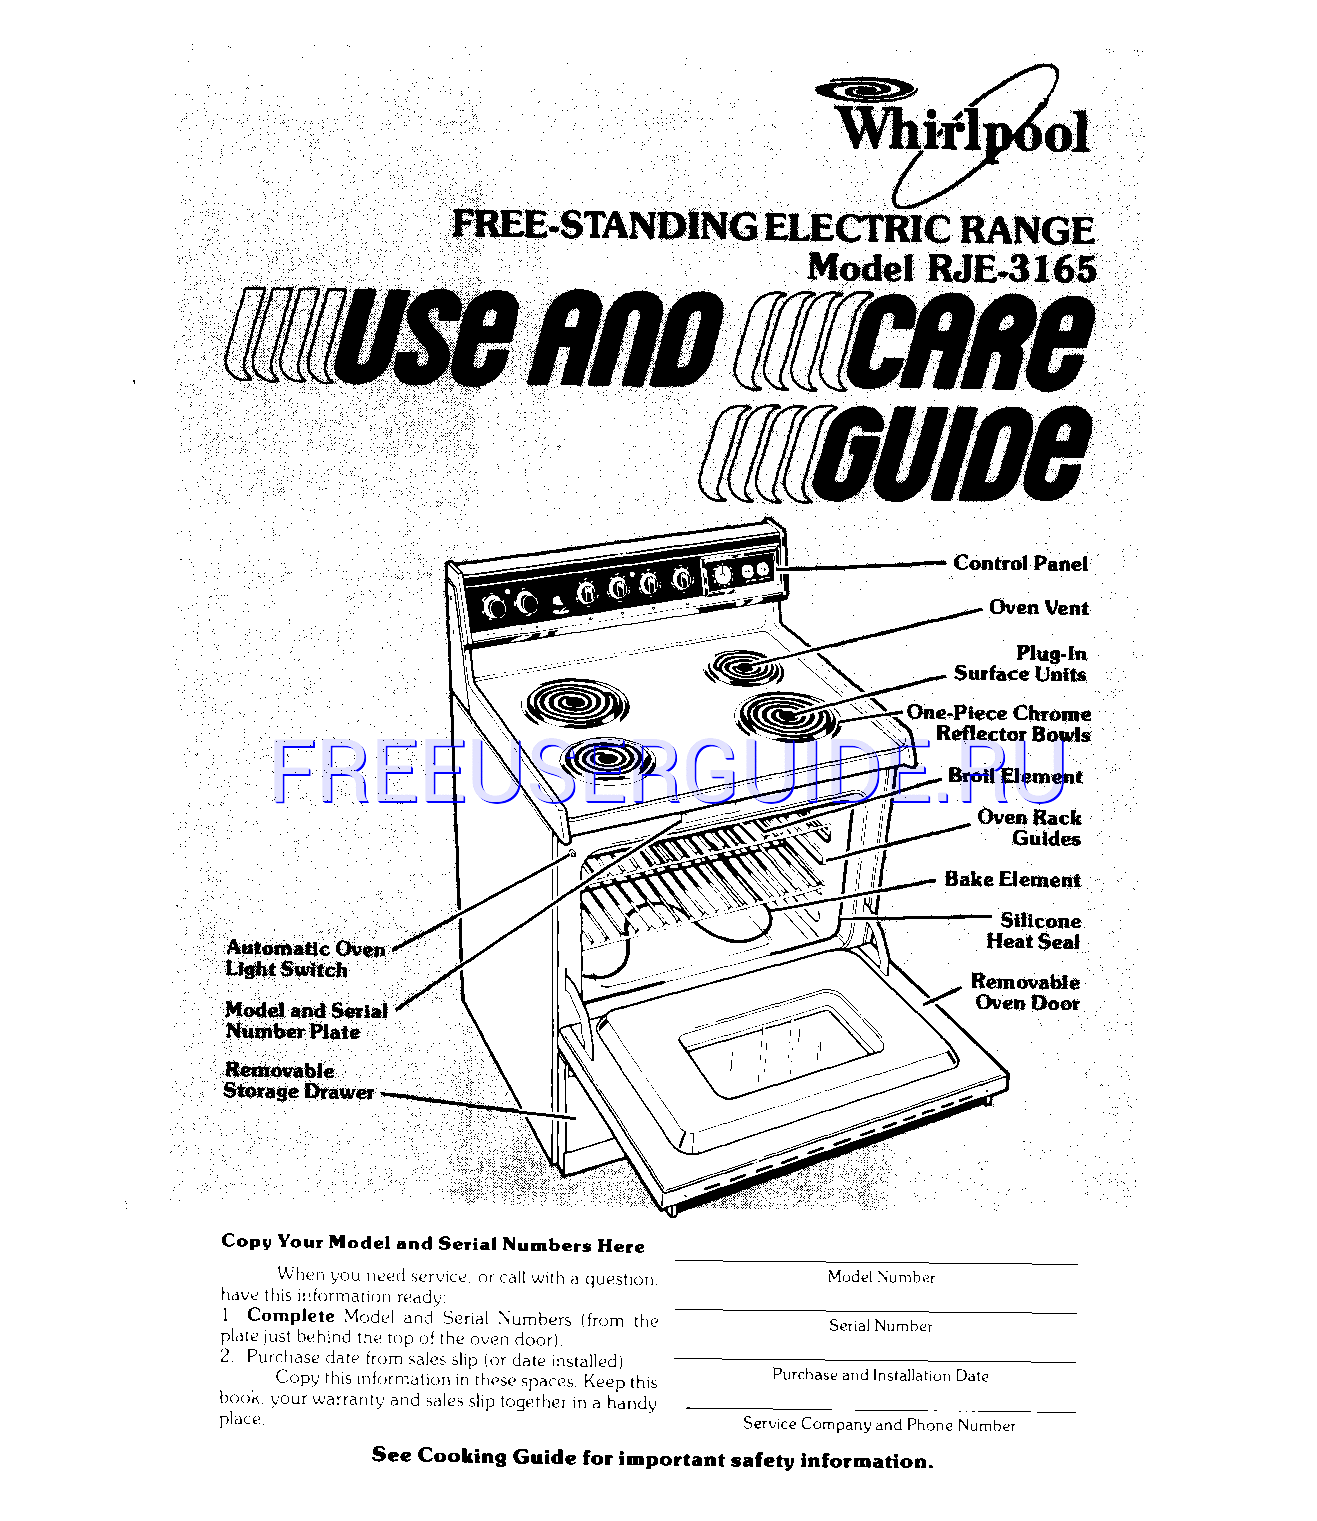 Leer online Manual de usuario para Whirlpool RJE-3165 (Page 1)